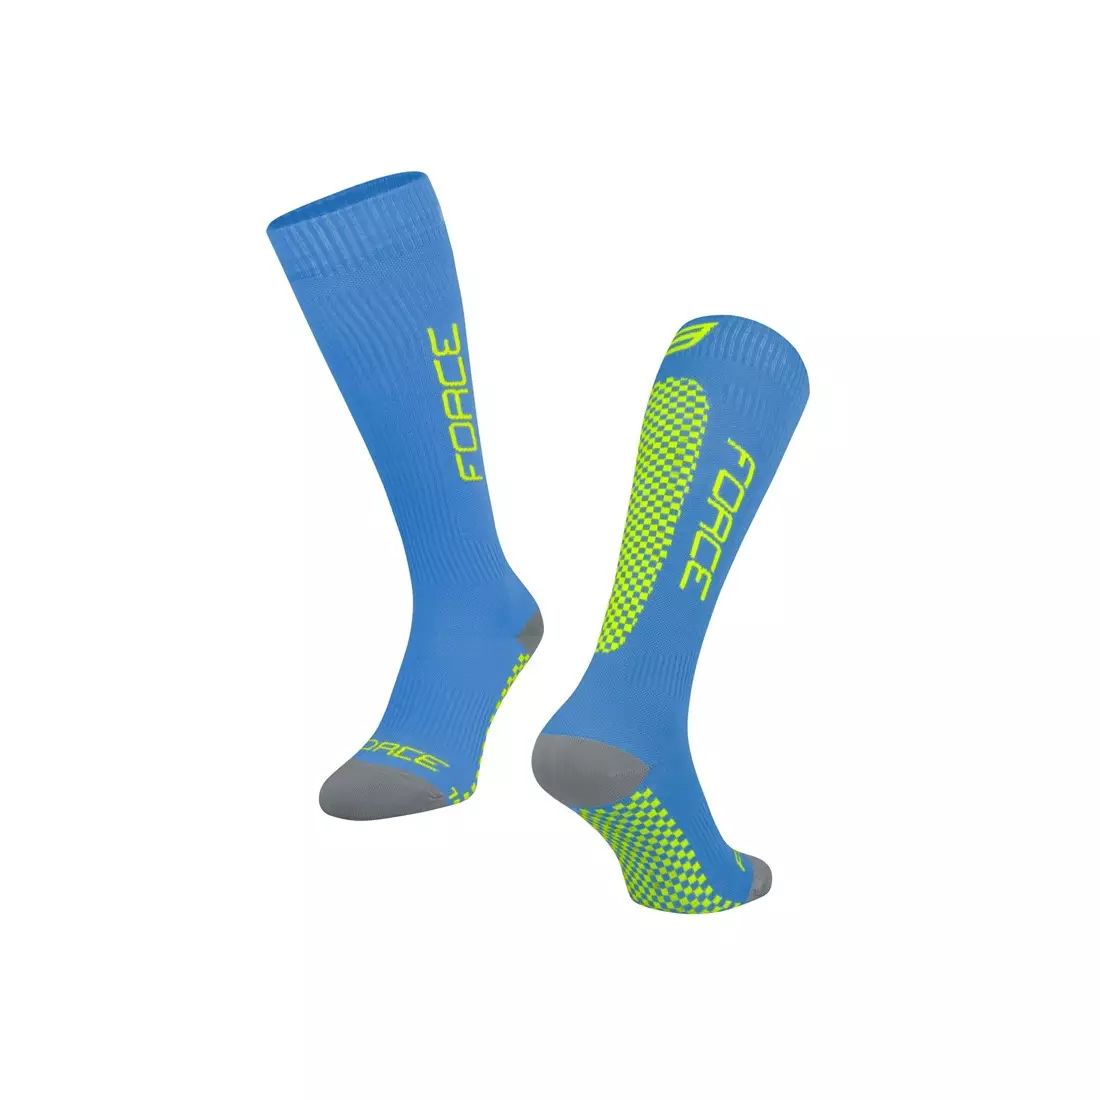 FORCE TESSERA COMPRESSION compression socks, blue and fluorine